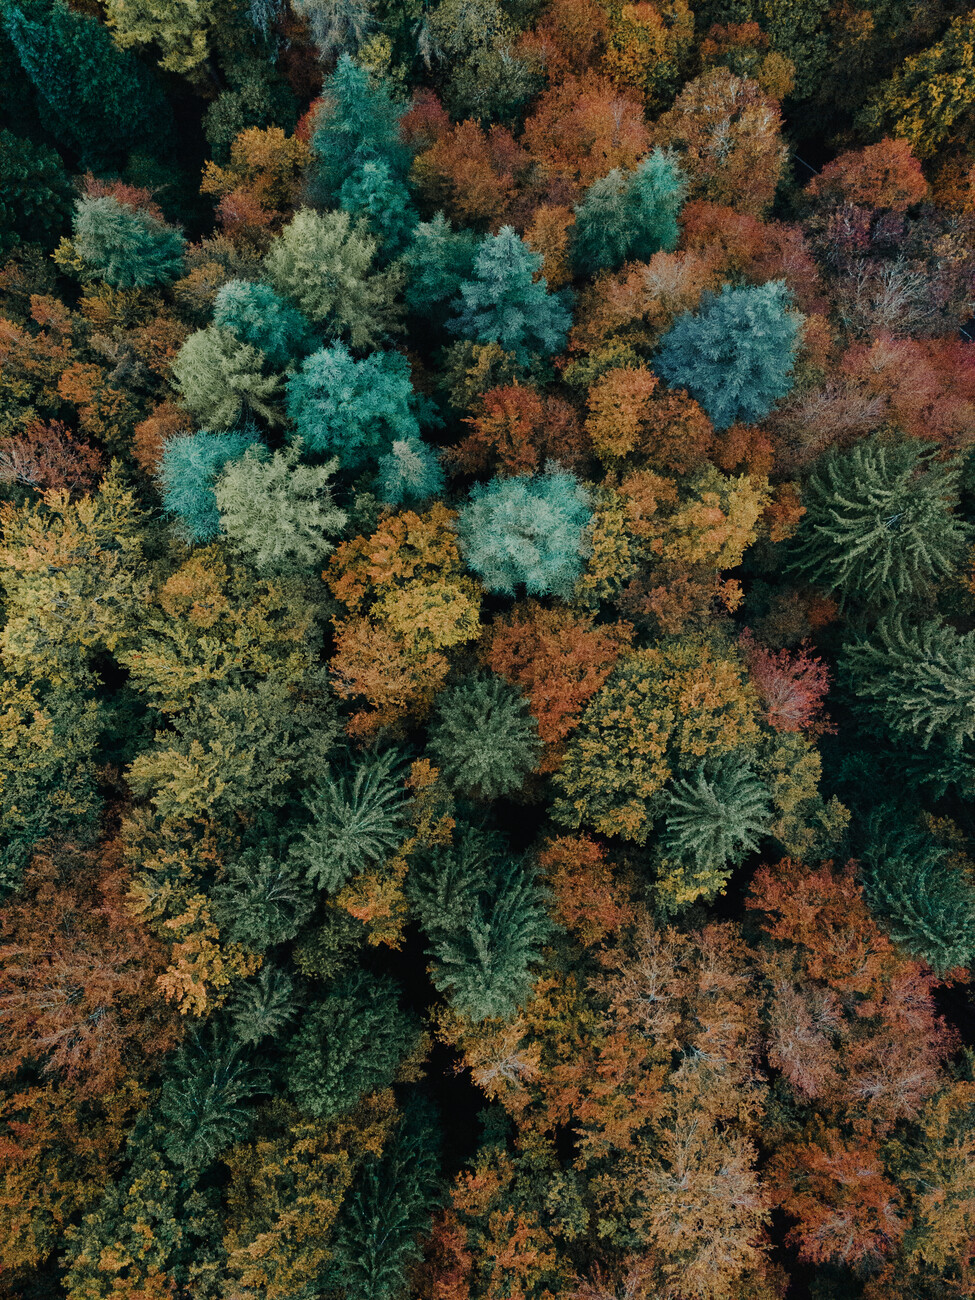 Umělecká fotografie Autumn forest from above